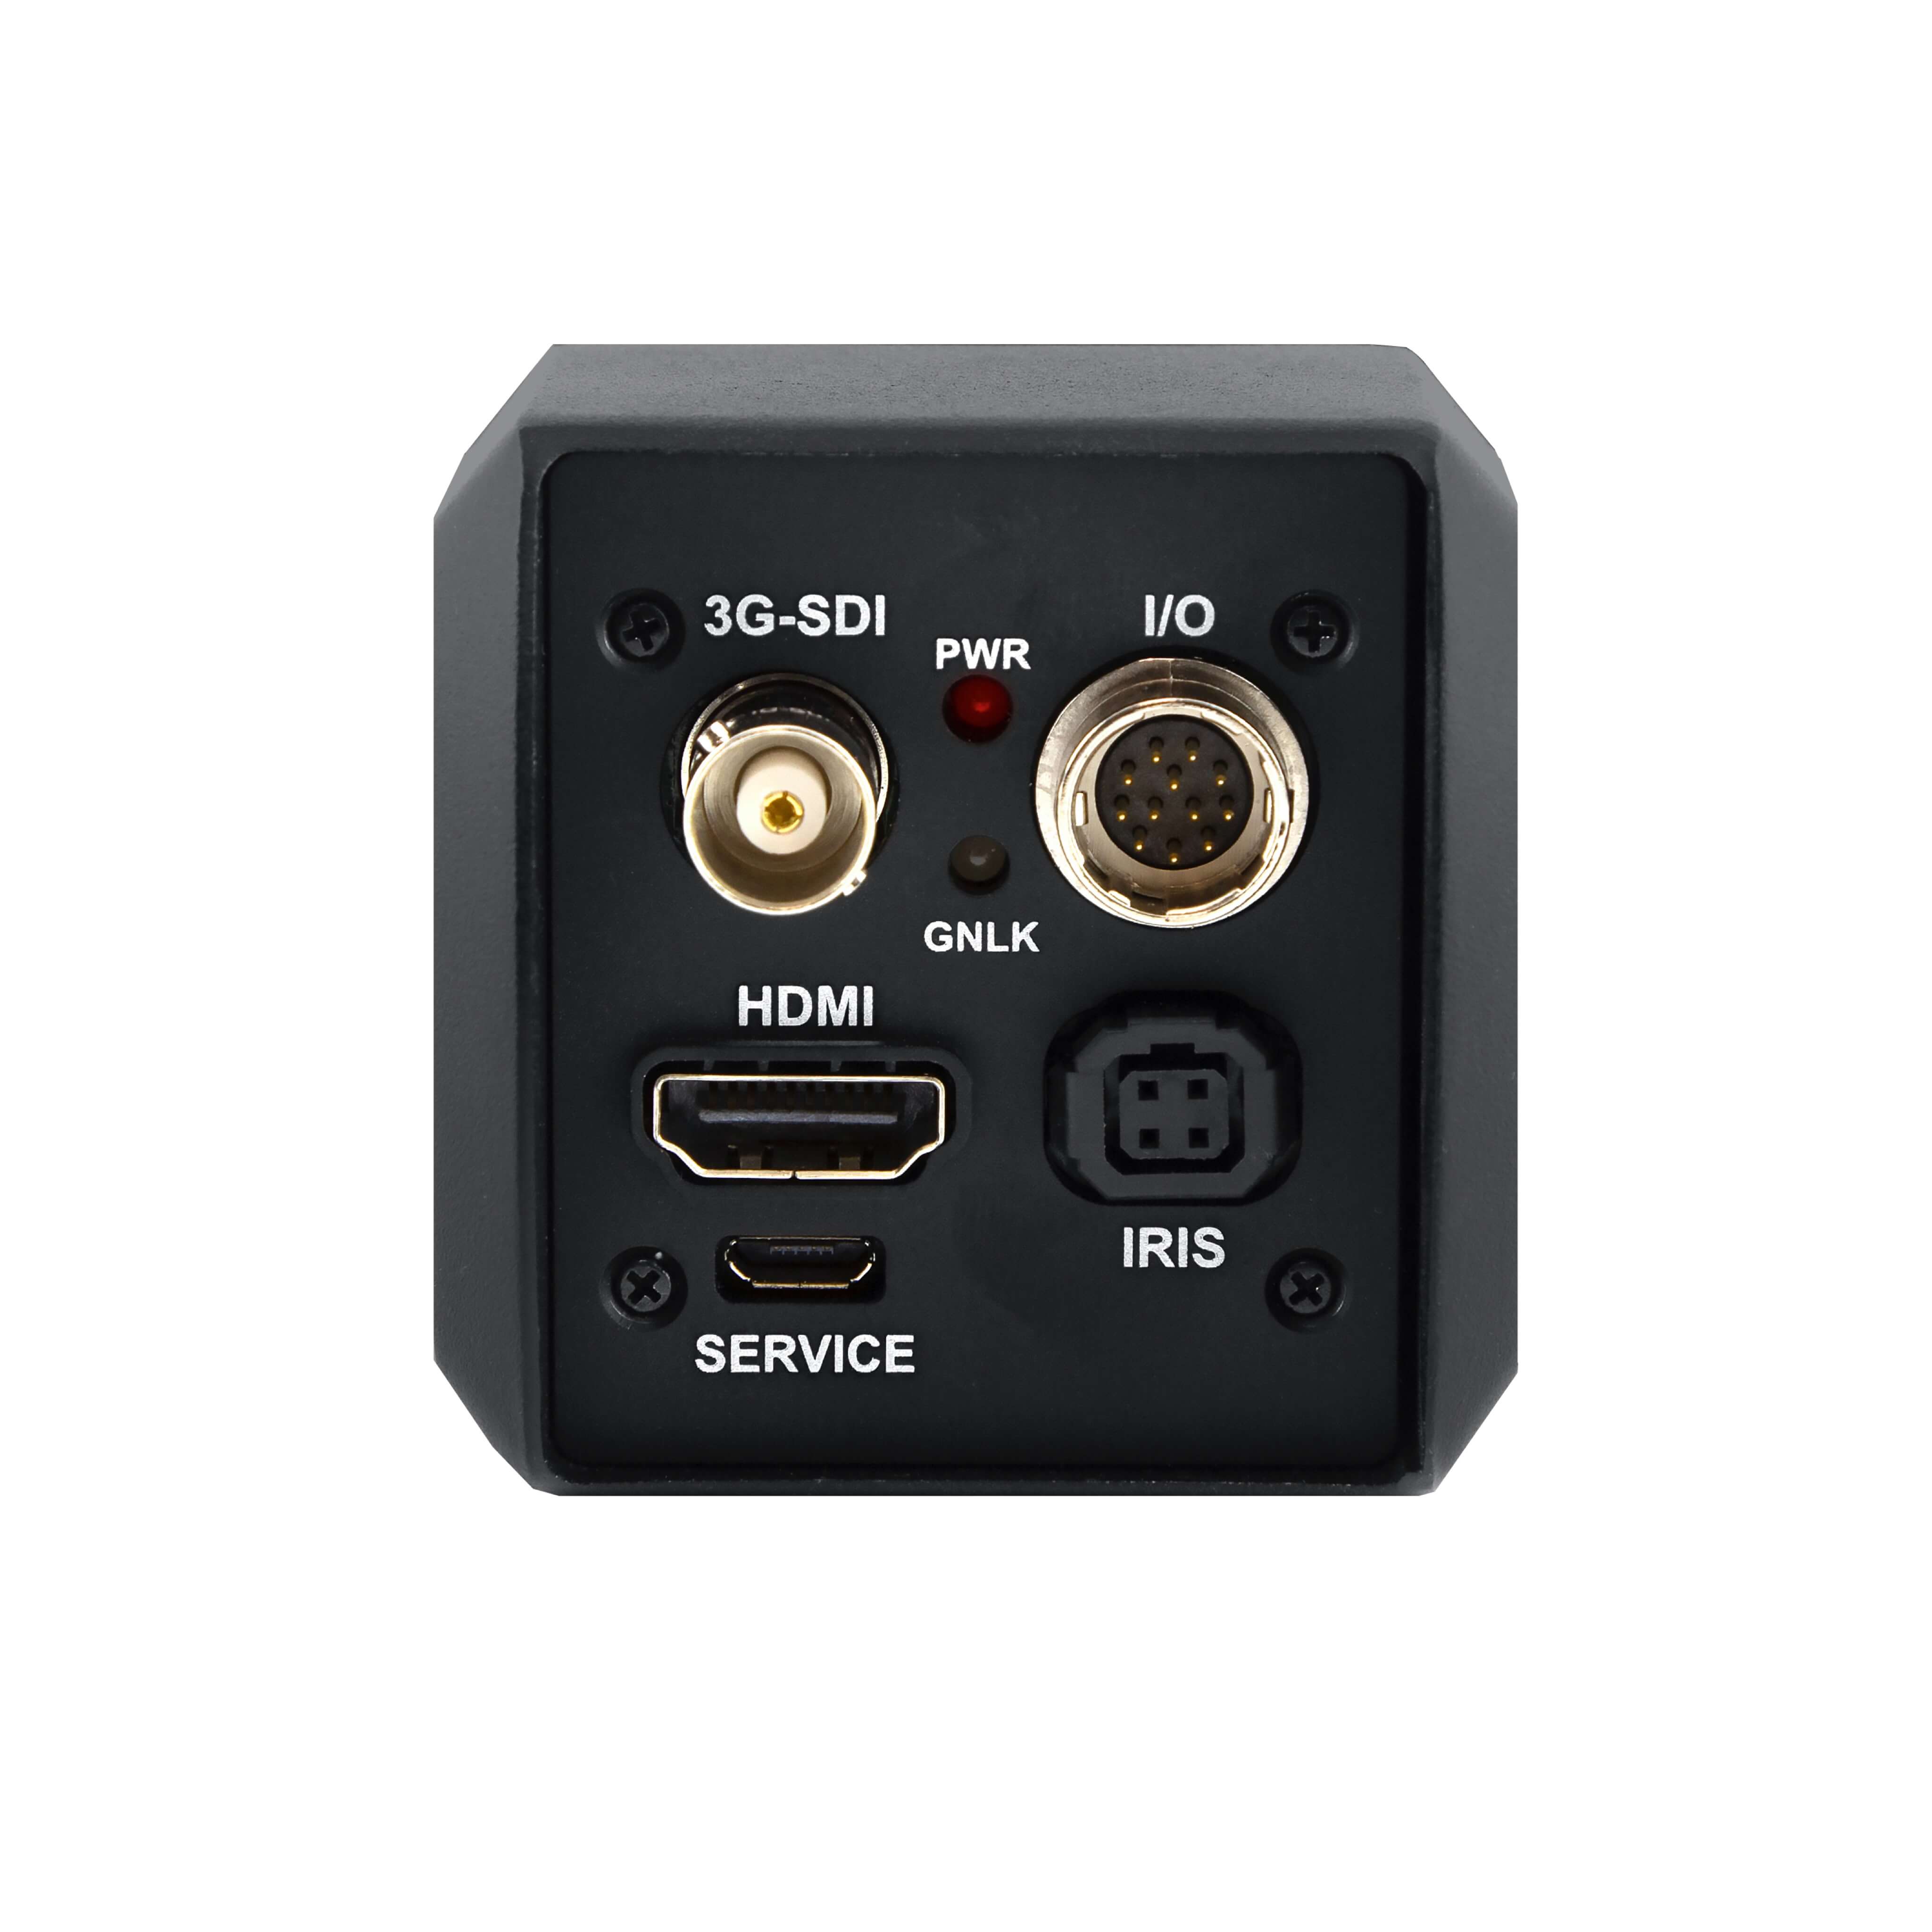 Marshall CV368 - Compact Global HD Camera with Genlock 3G-SDI and HDMI, rear